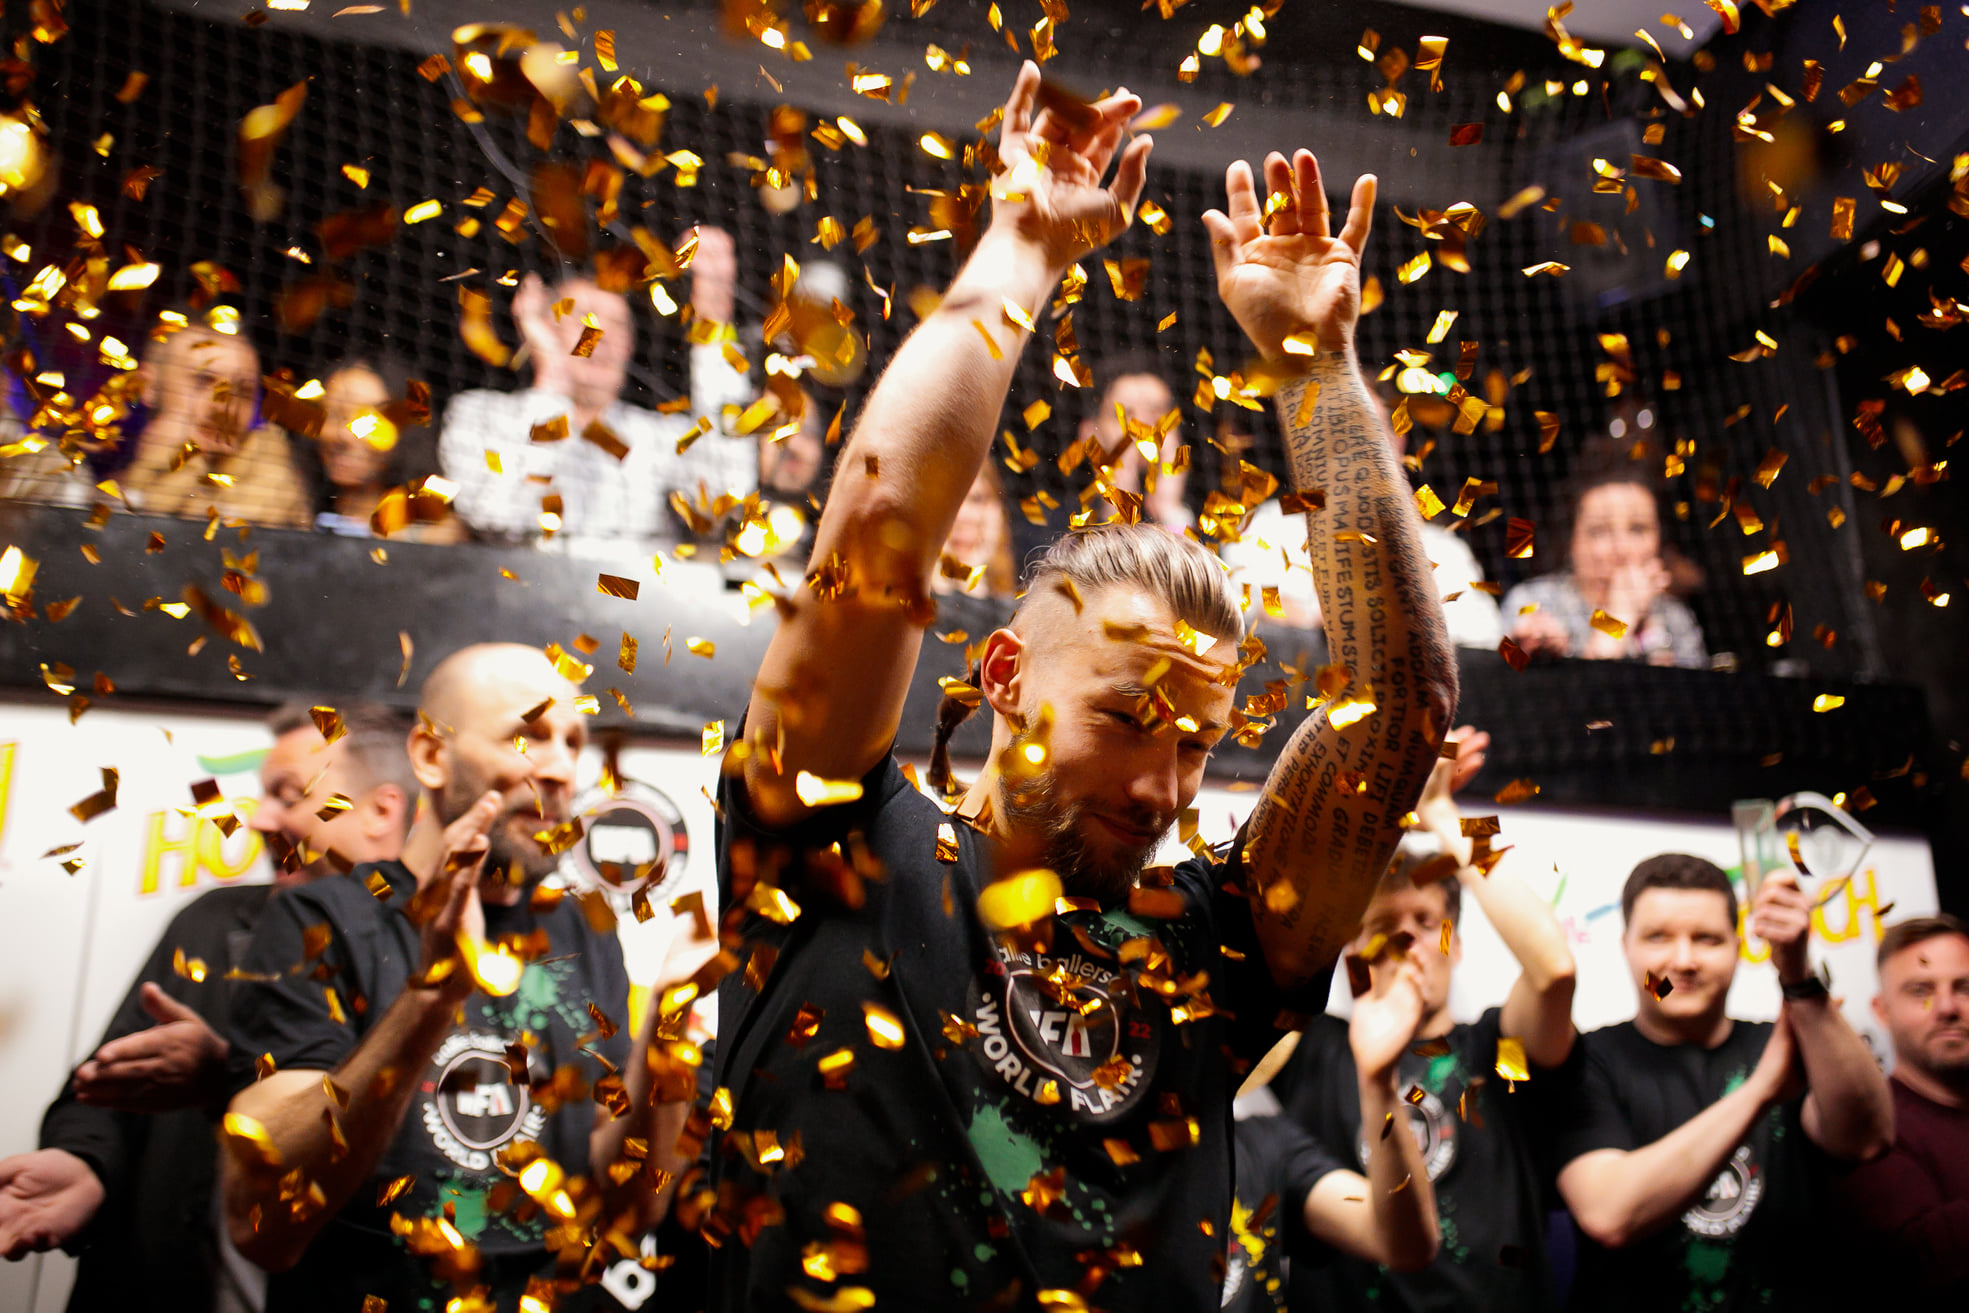 man celebrating under confetti cannons